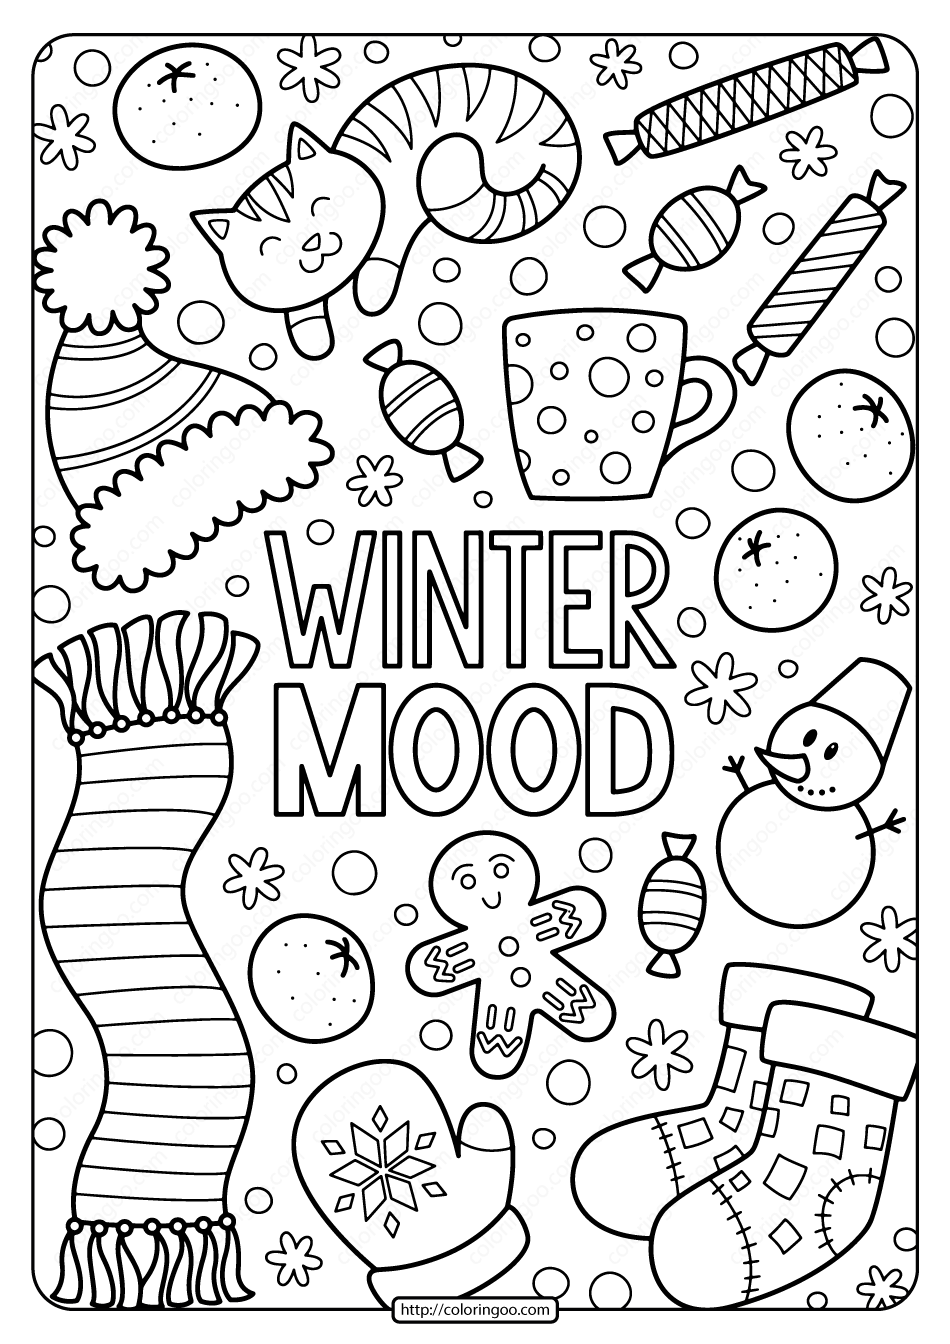 free printable winter mood pdf coloring page